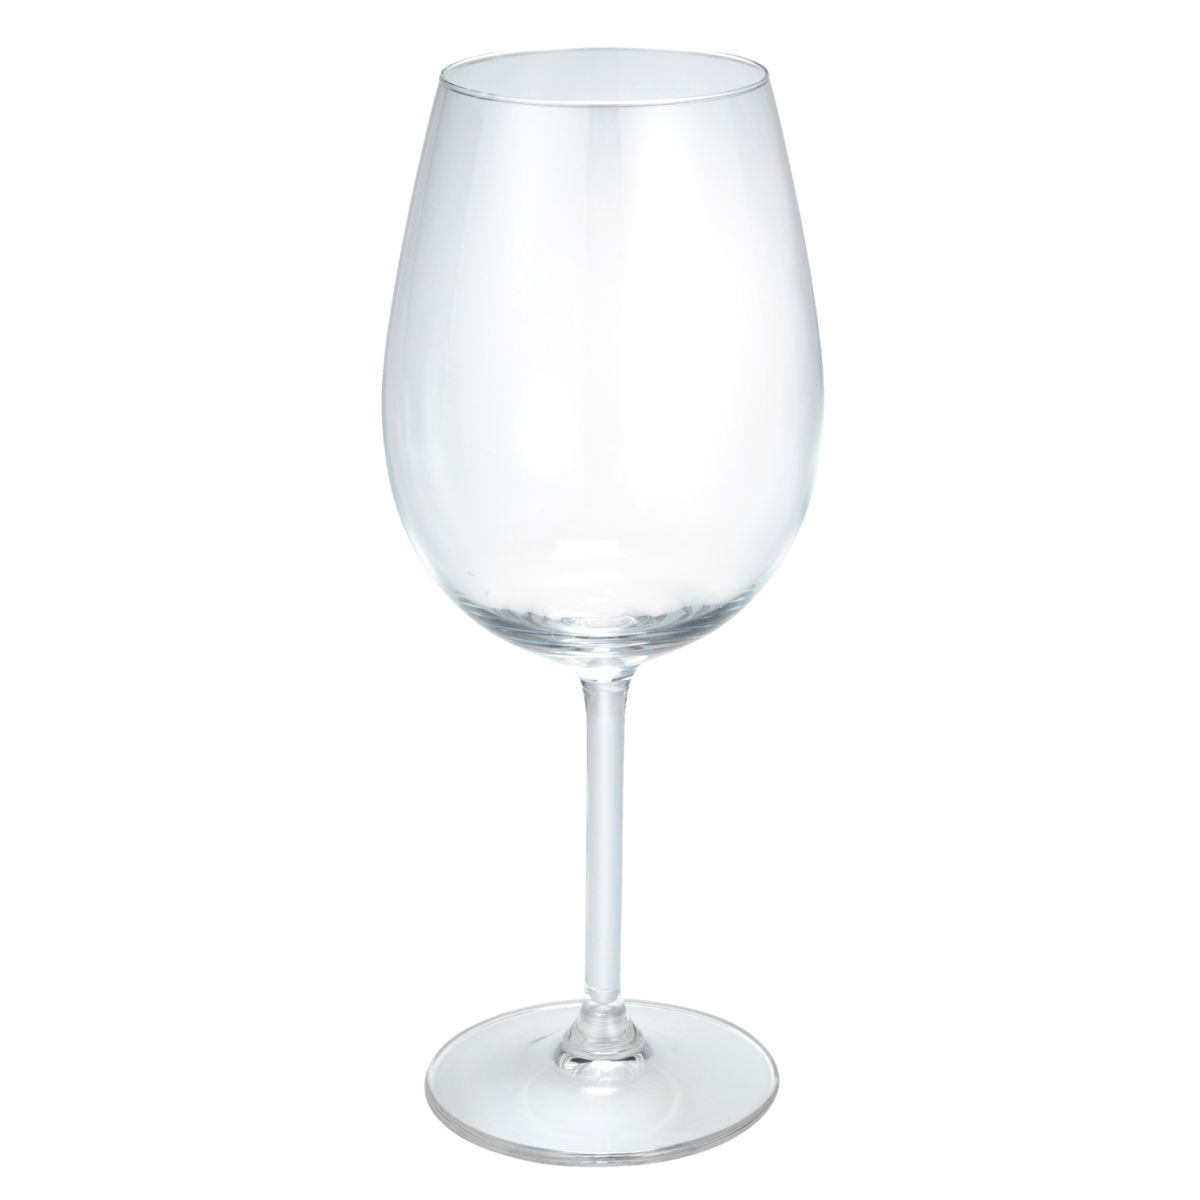 Royal leerdam Witte wijnglas Bouquet met vulstreepje; 290ml, 5.8x18.6 cm (ØxH); transparant; 0.2 l vulstreepje, 6 stuk / verpakking